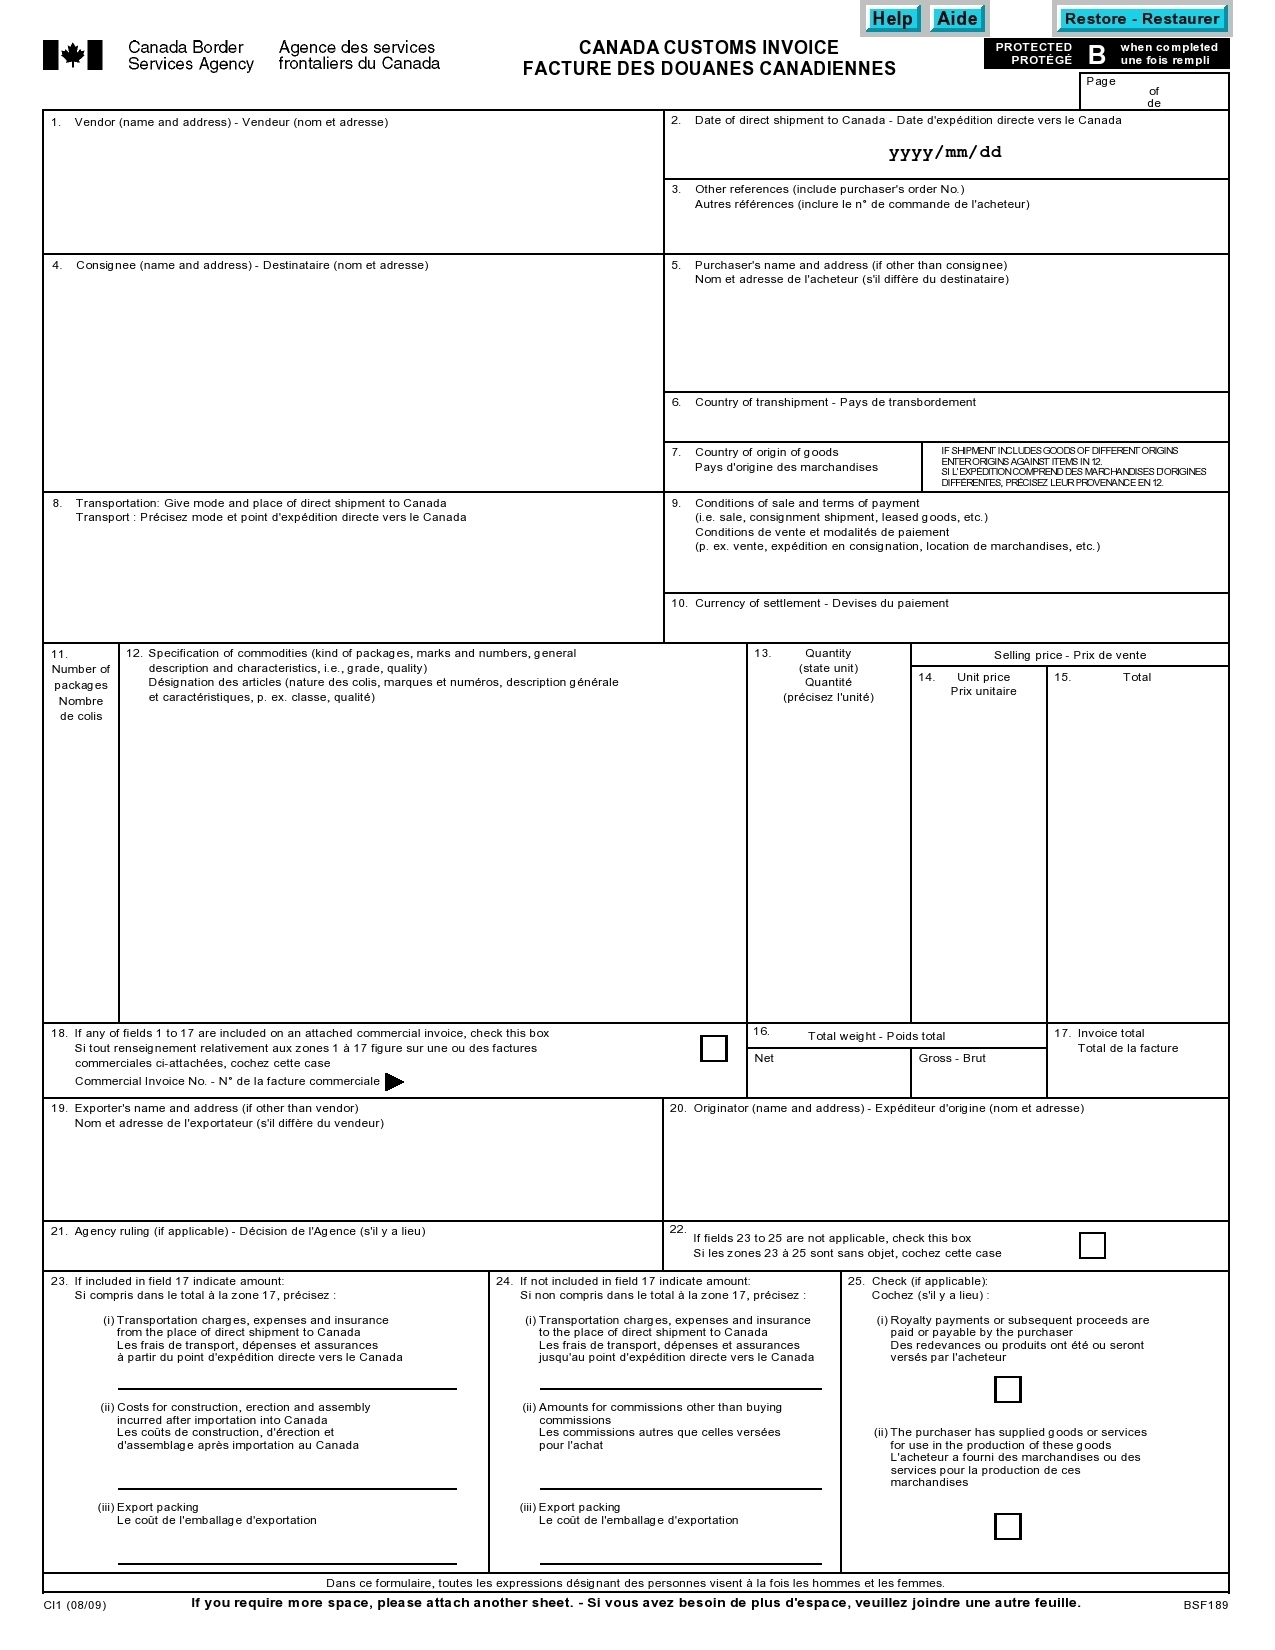 canada customs invoice fillable invoice template free 2016 custom invoice forms